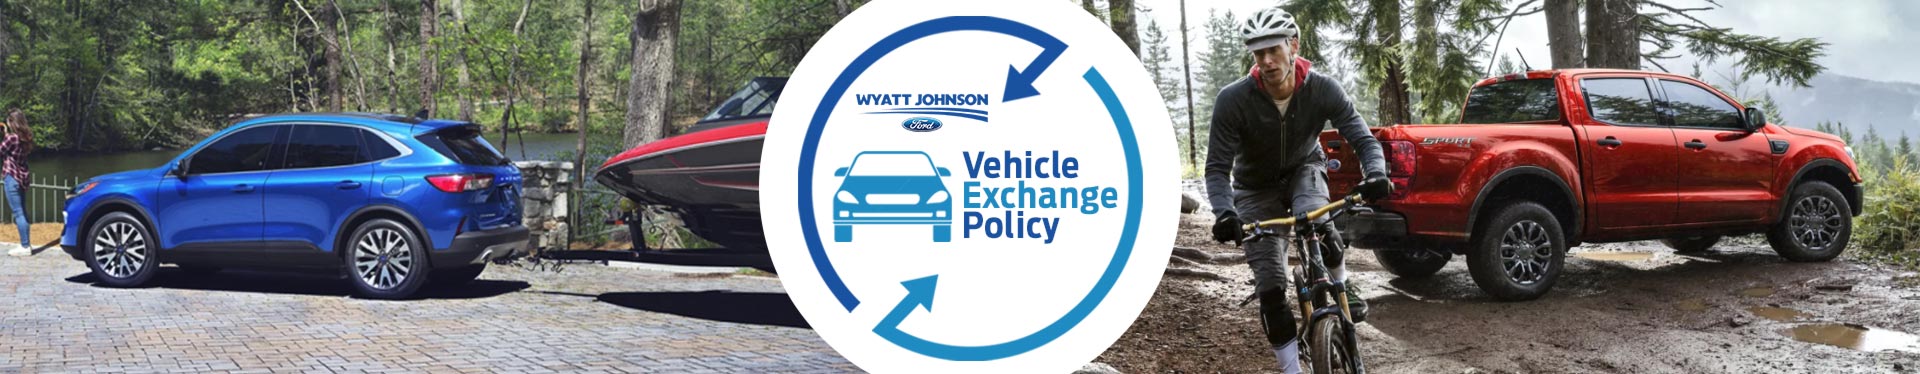 Vehicle Exchange Policy in Nashville, TN